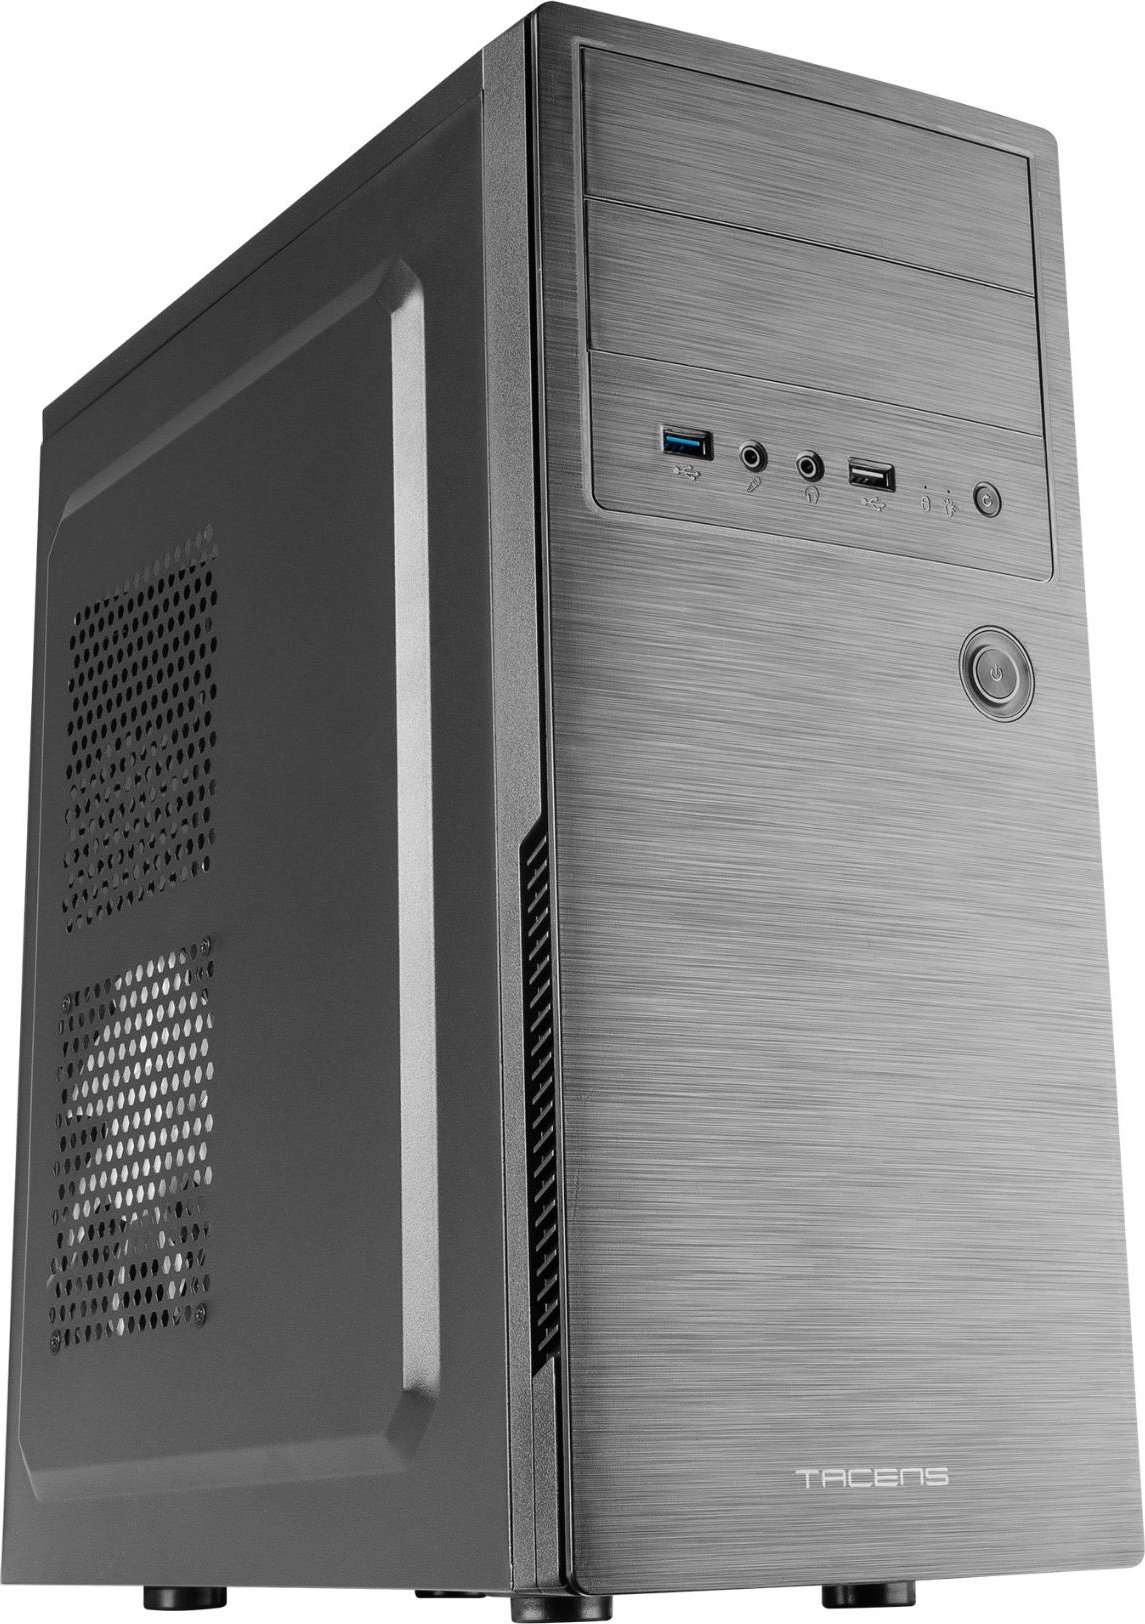 MC100W caja mars gaming mc100w caja pc atx ventilador 90mm frgb  convect-cool blancorgb blanco